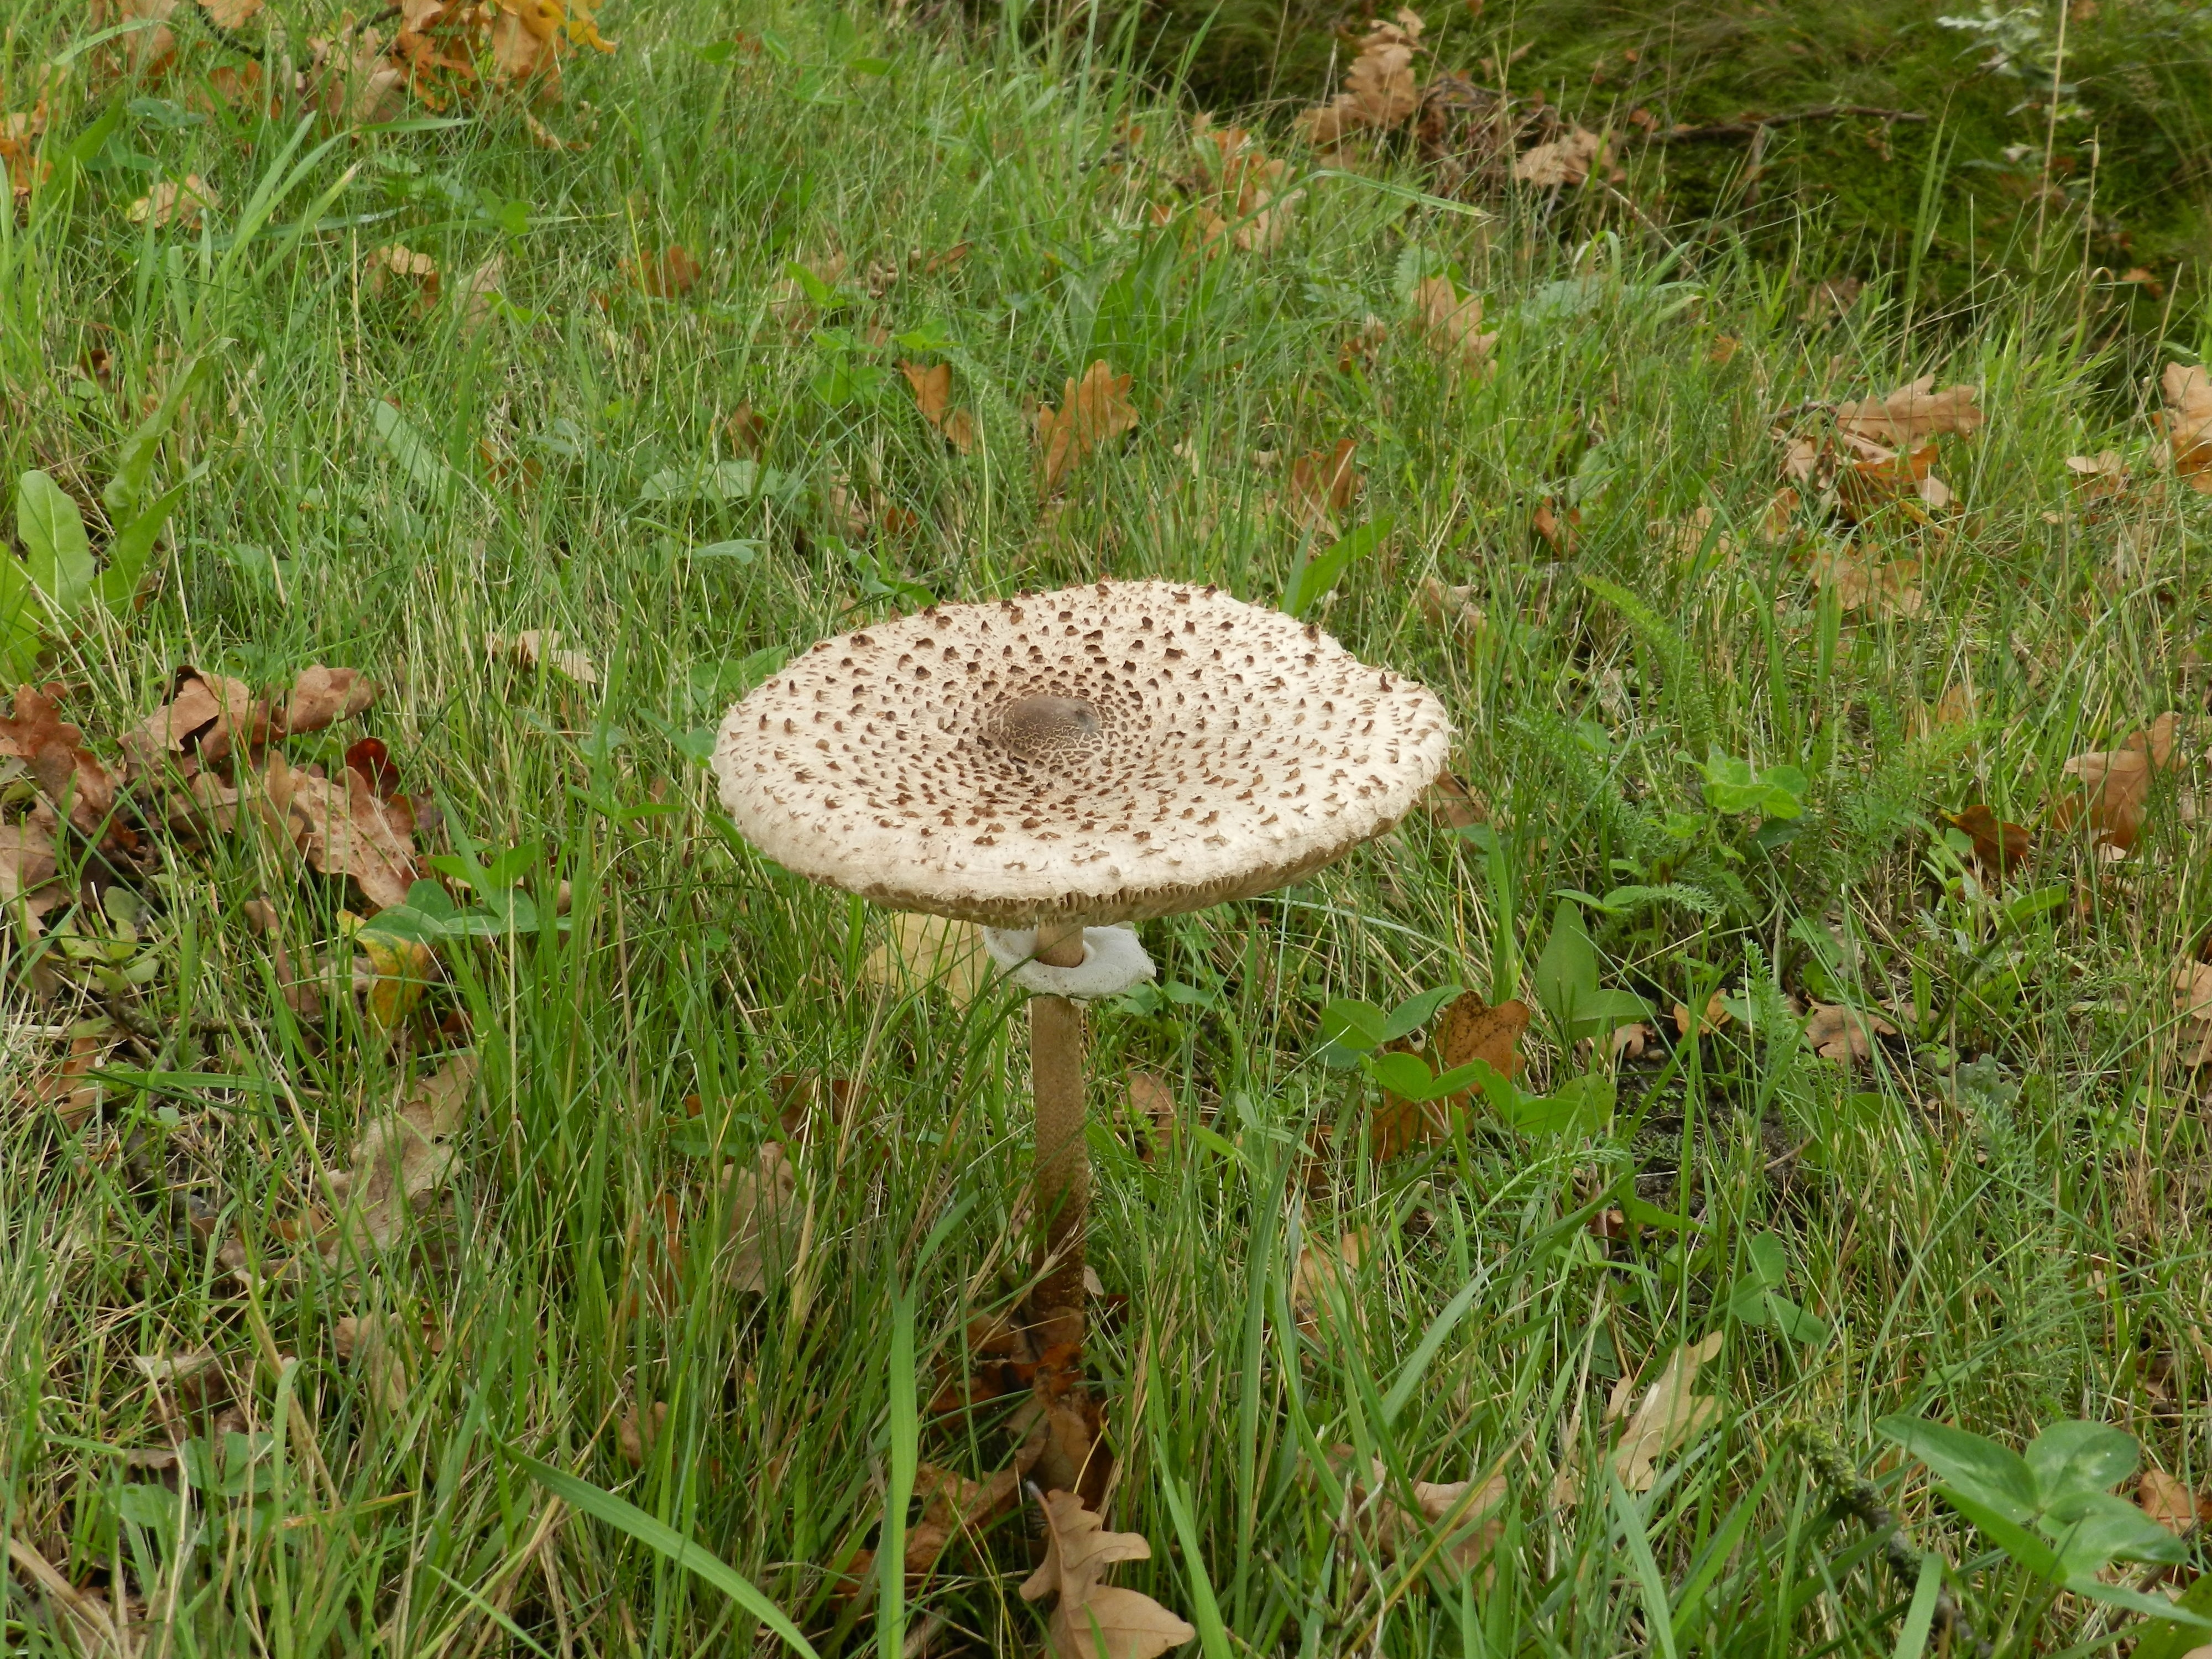 white and black mushroom